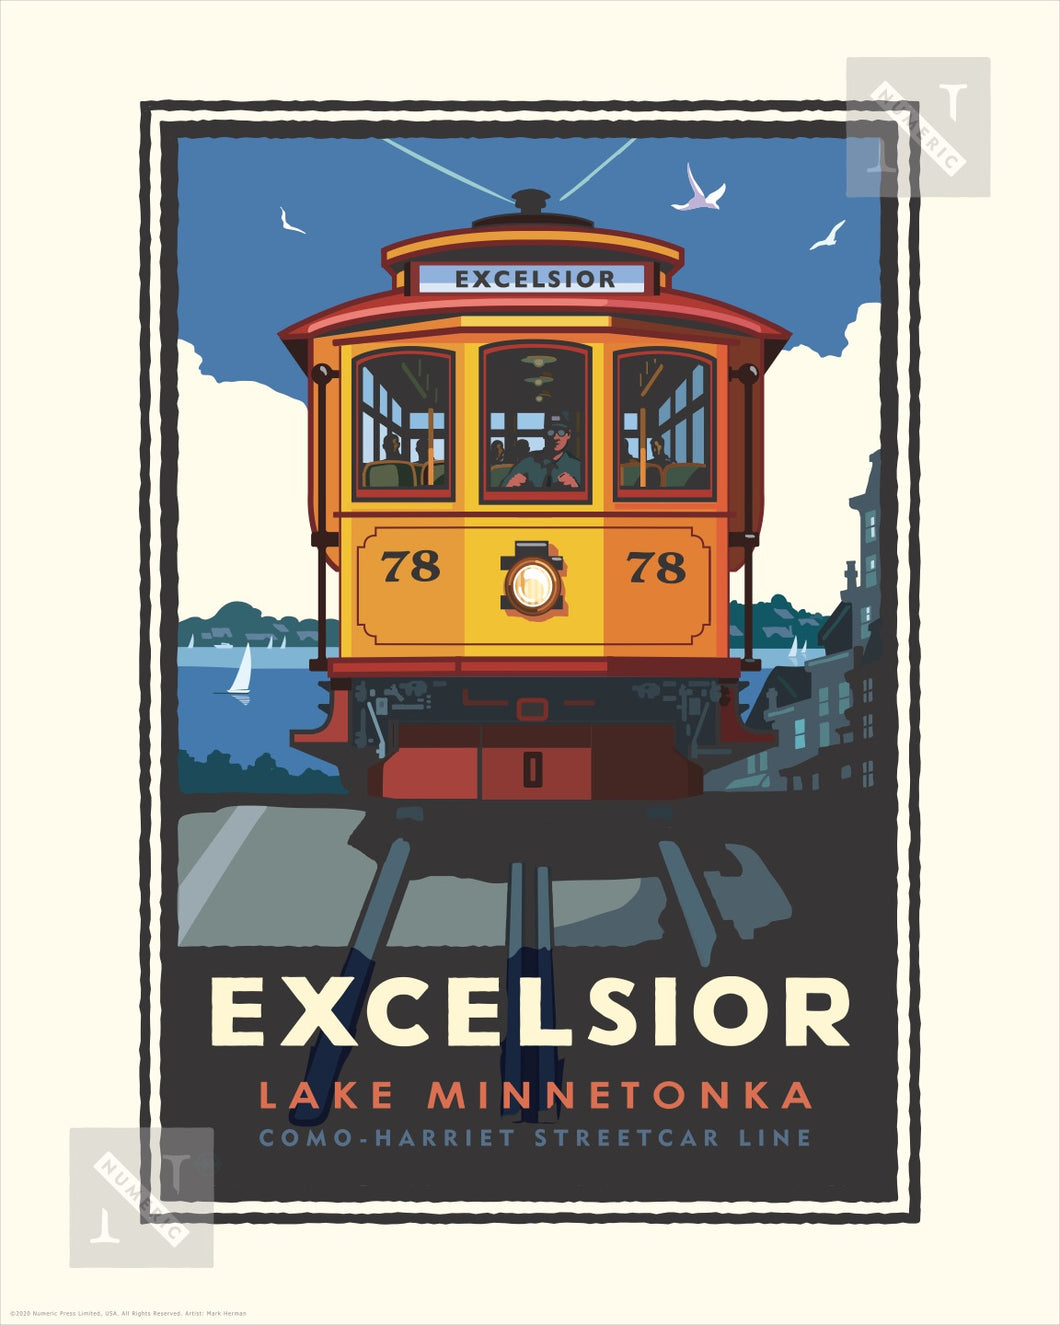 Lake Minnetonka Excelsior Trolley - Landmark Series Print